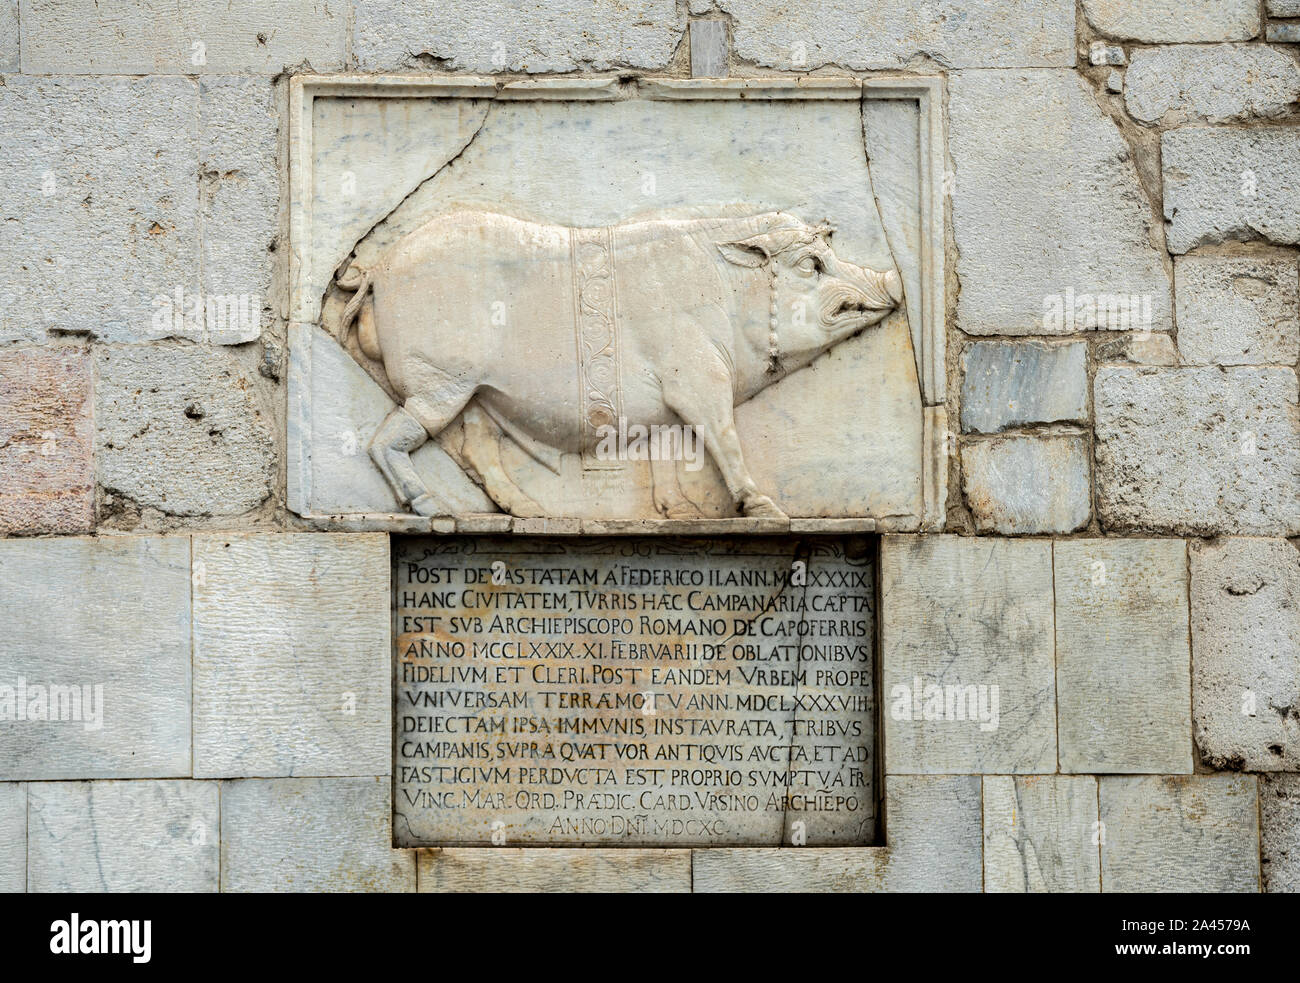 stolato wild boar, symbol of the city of Benevento Stock Photo